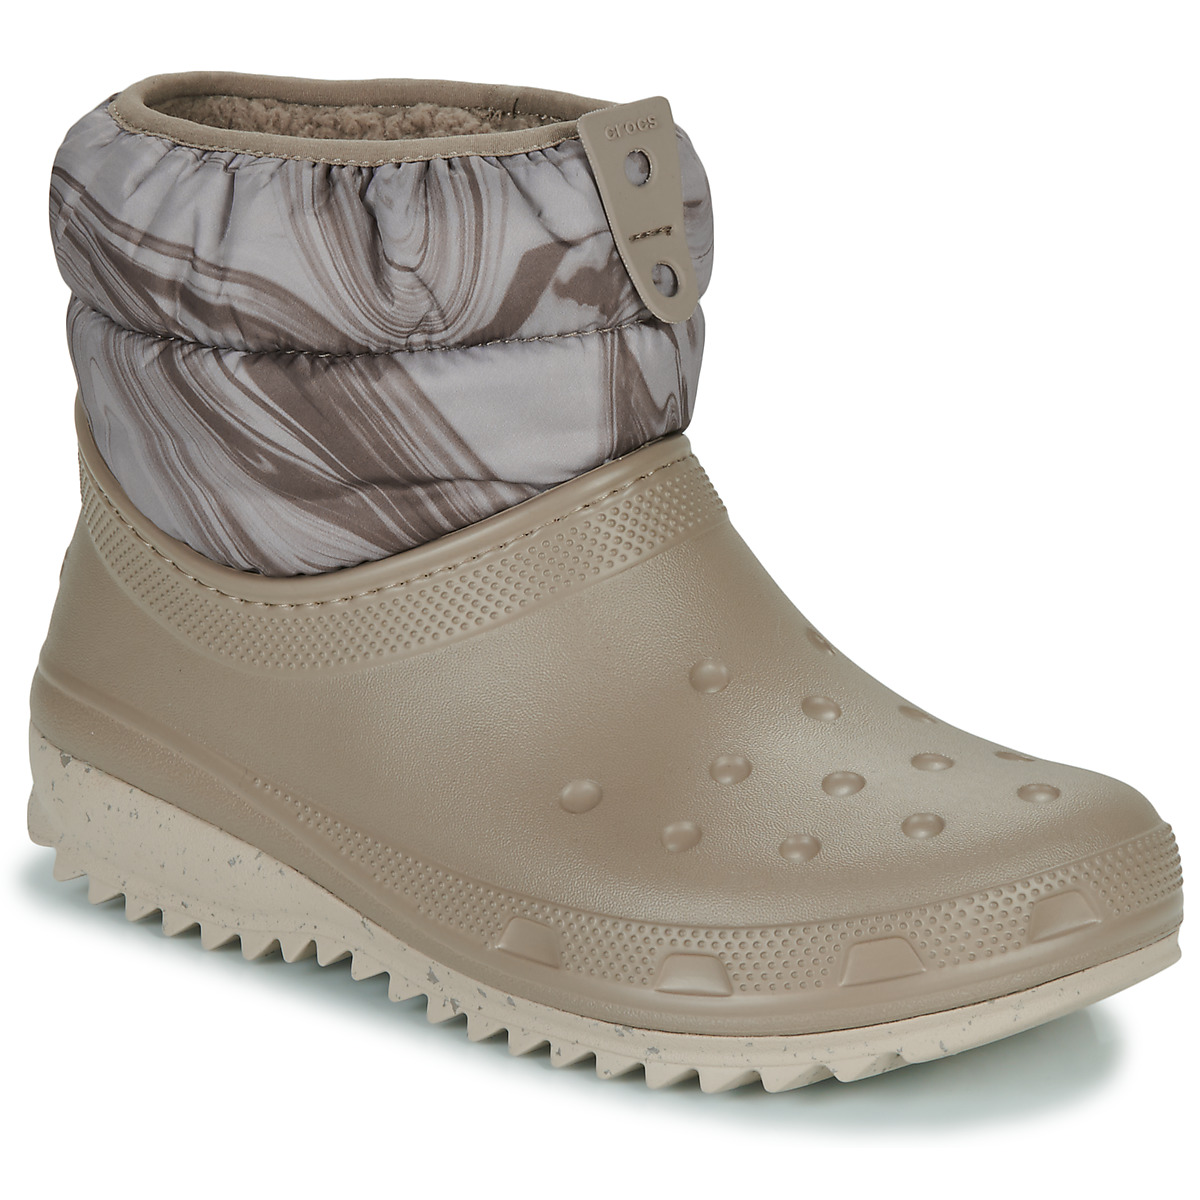 Chaussures Femme Bottes de neige Crocs CLASSIC NEO PUFF SHORTY BOOT W 